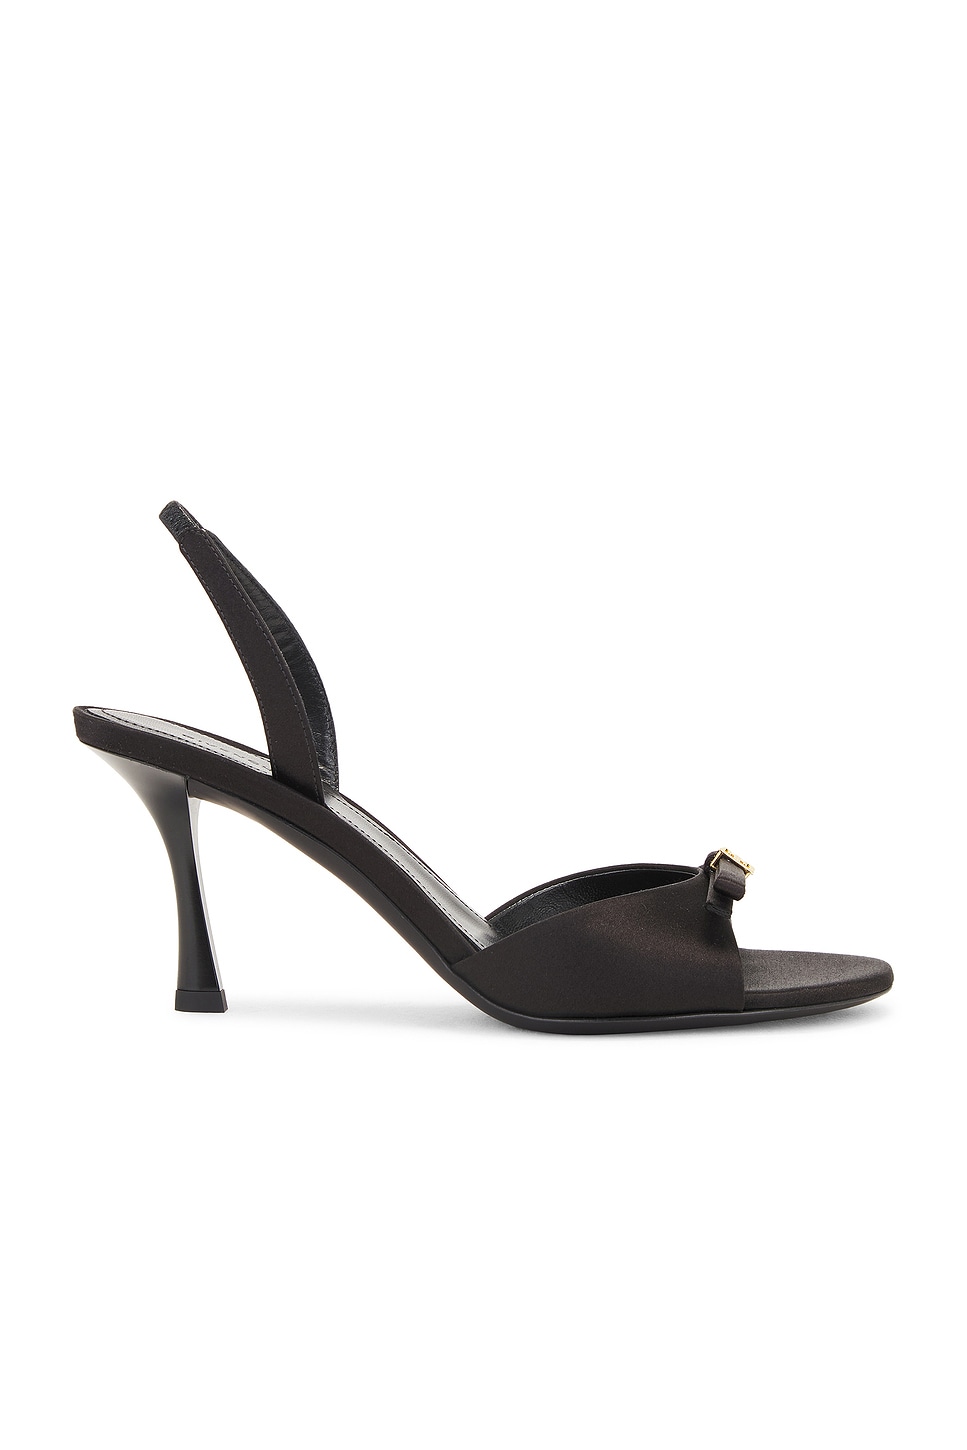 Image 1 of Givenchy Slingback Sandal in Black